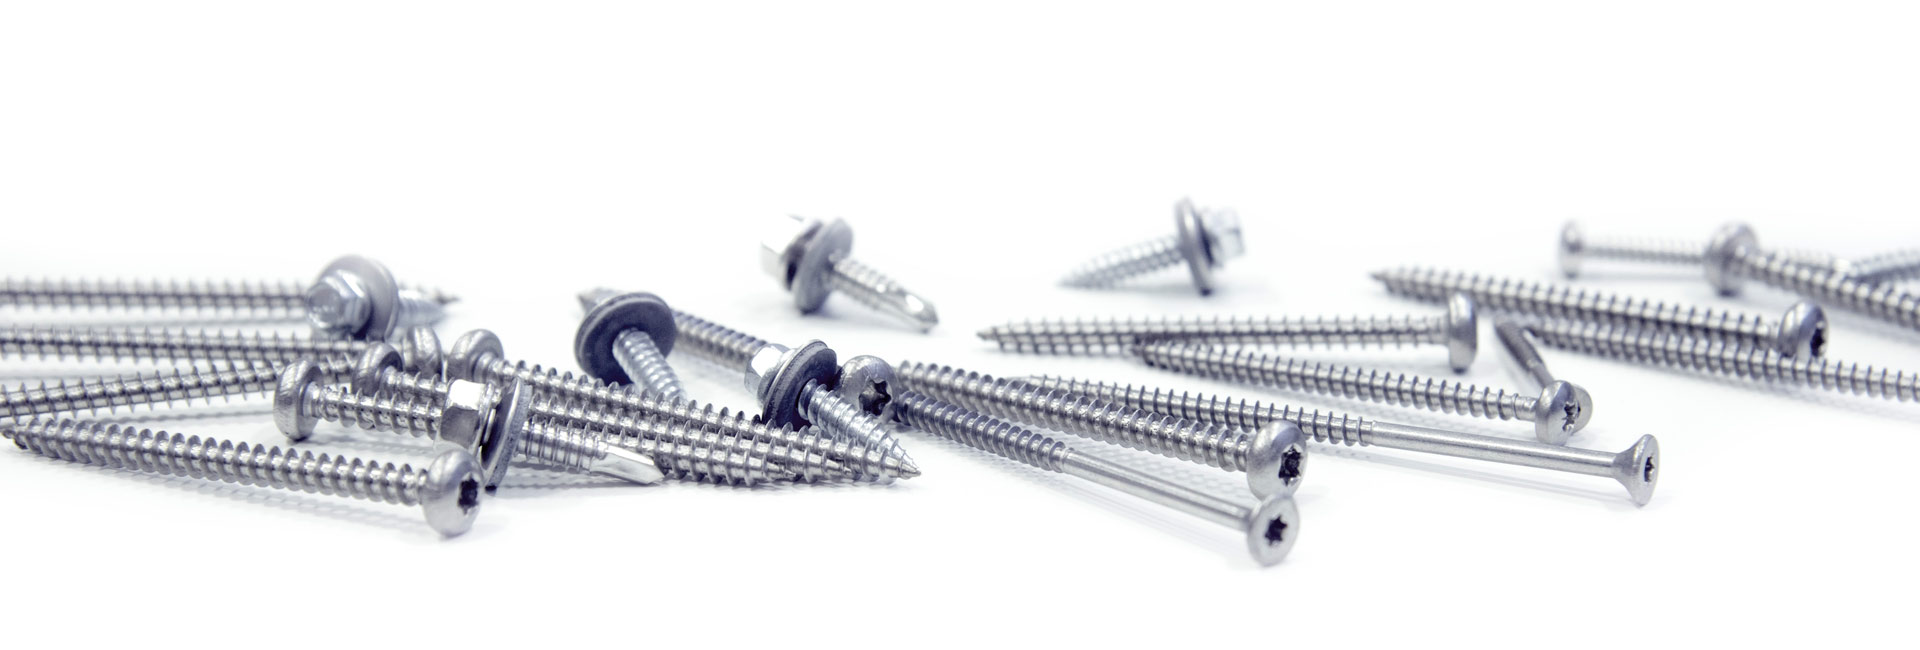 Approved screws at Tobsteel GmbH